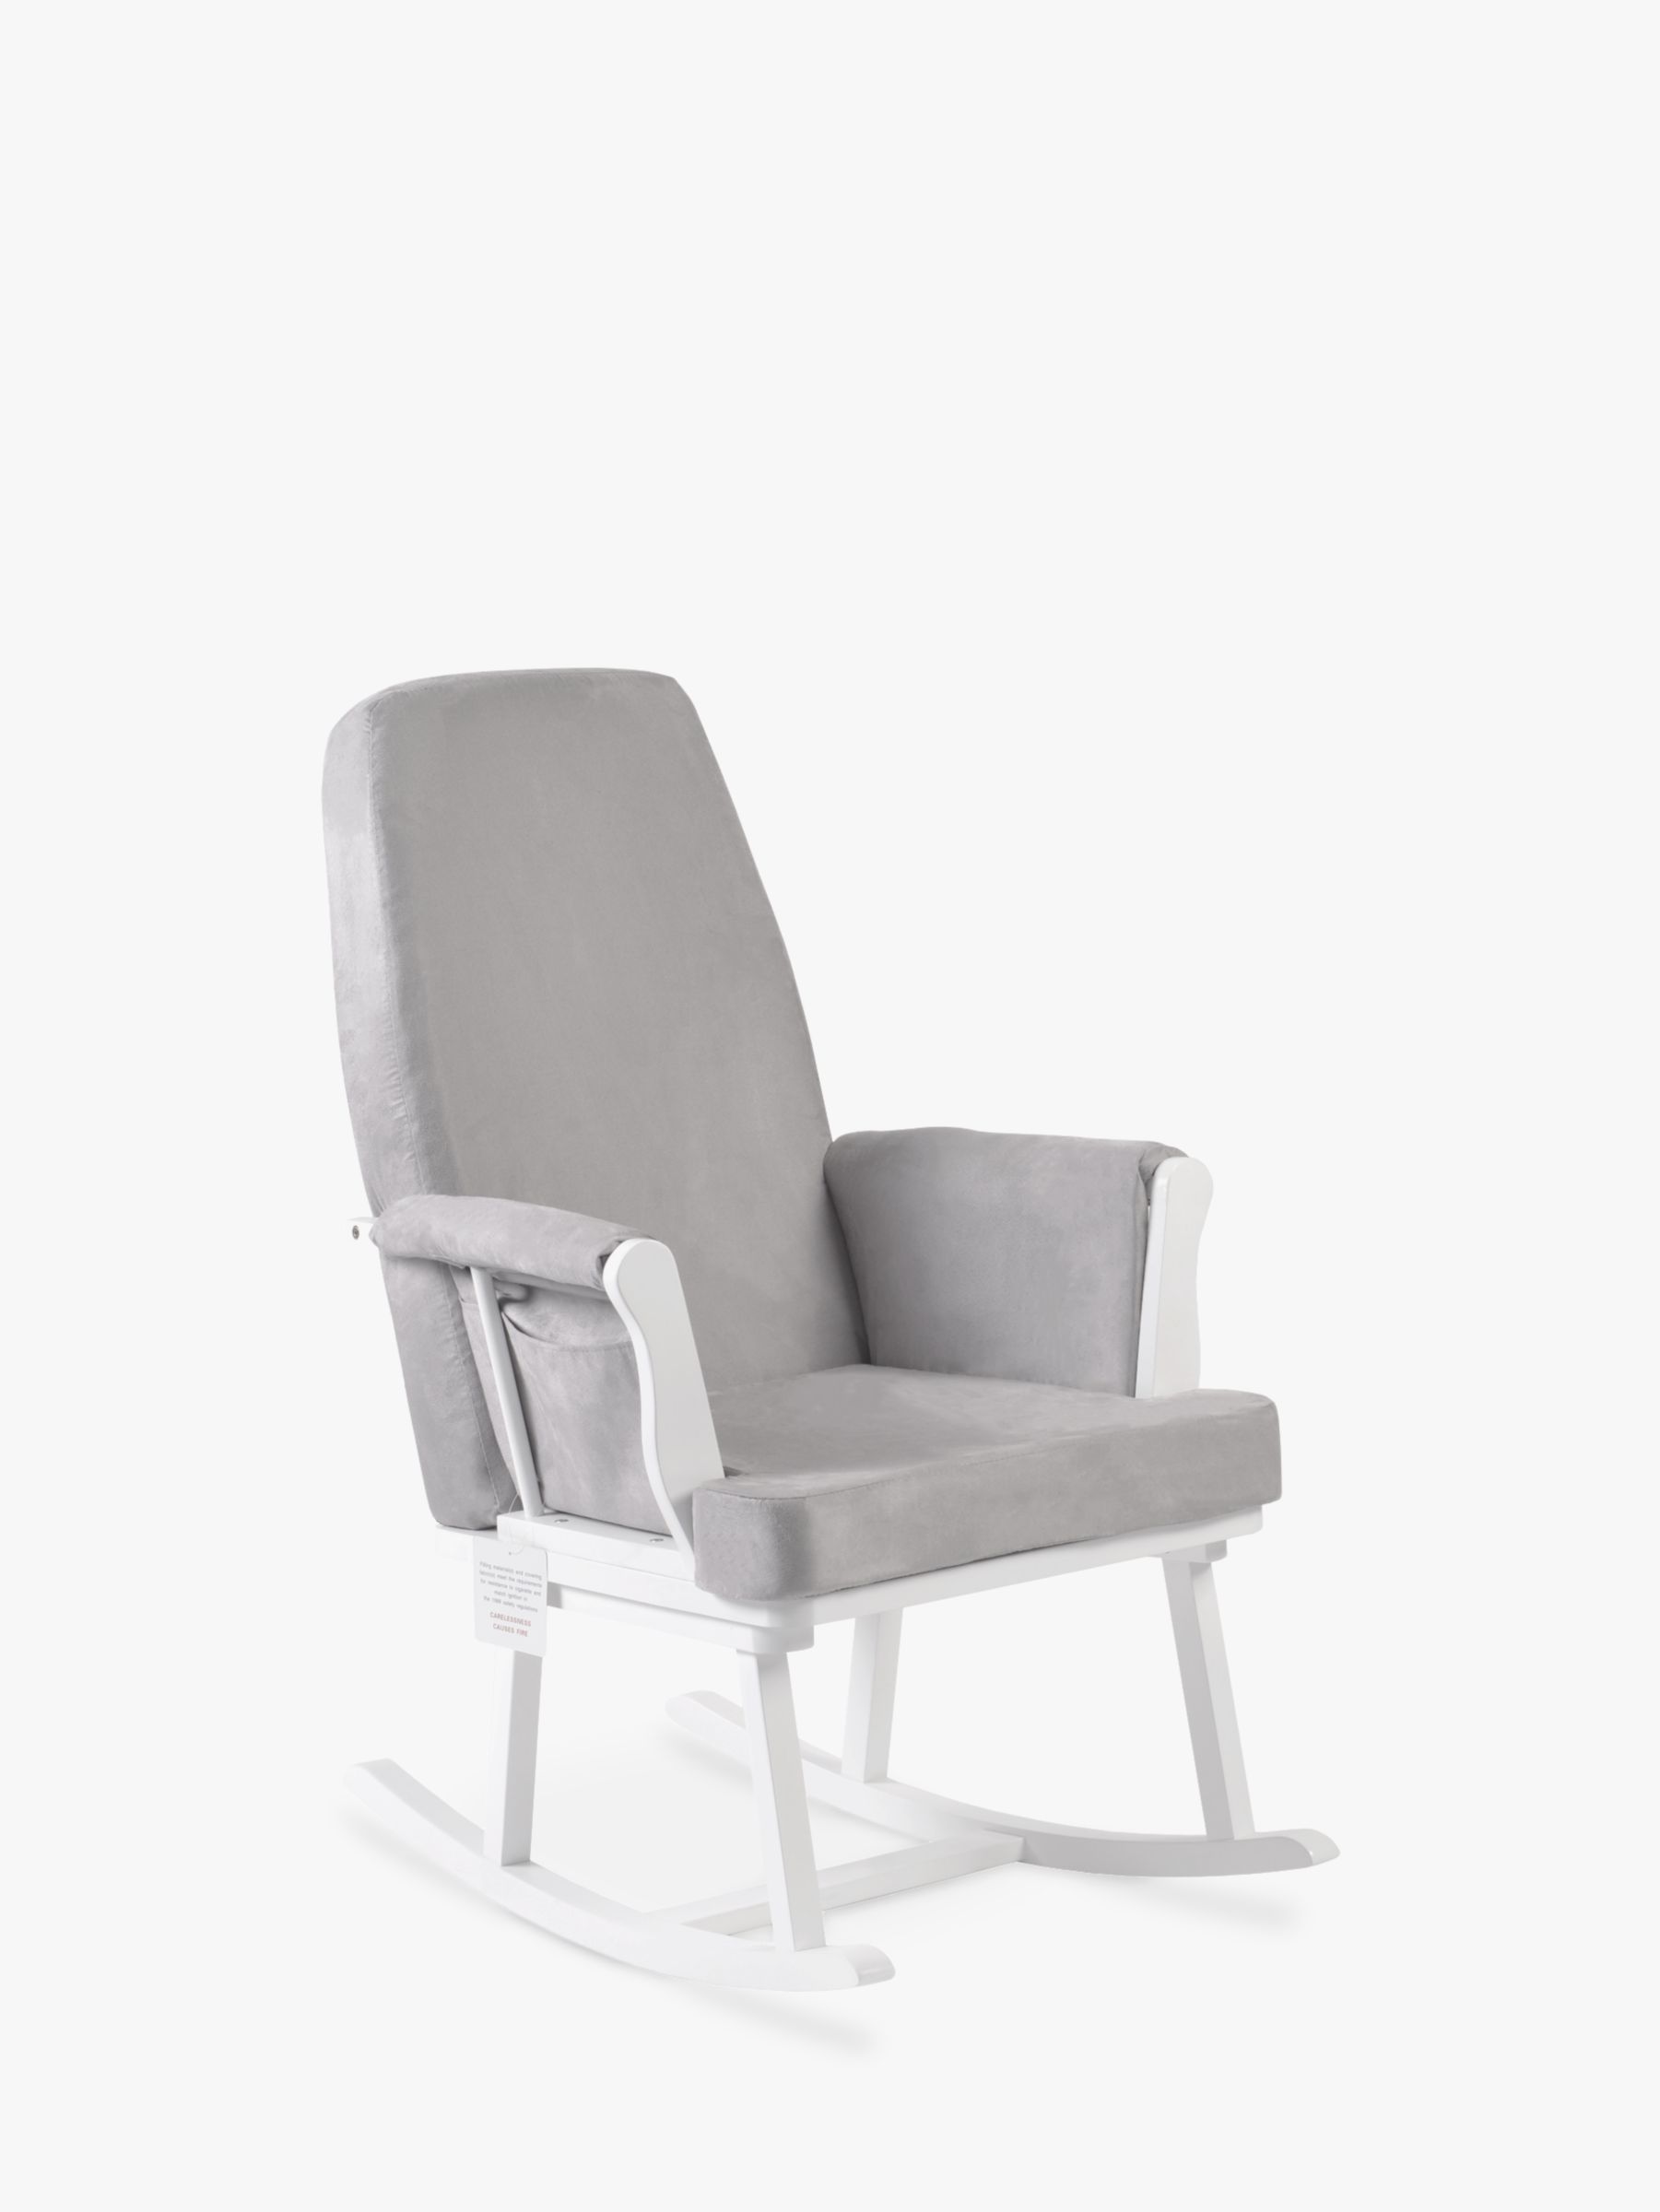 nursing chair grey